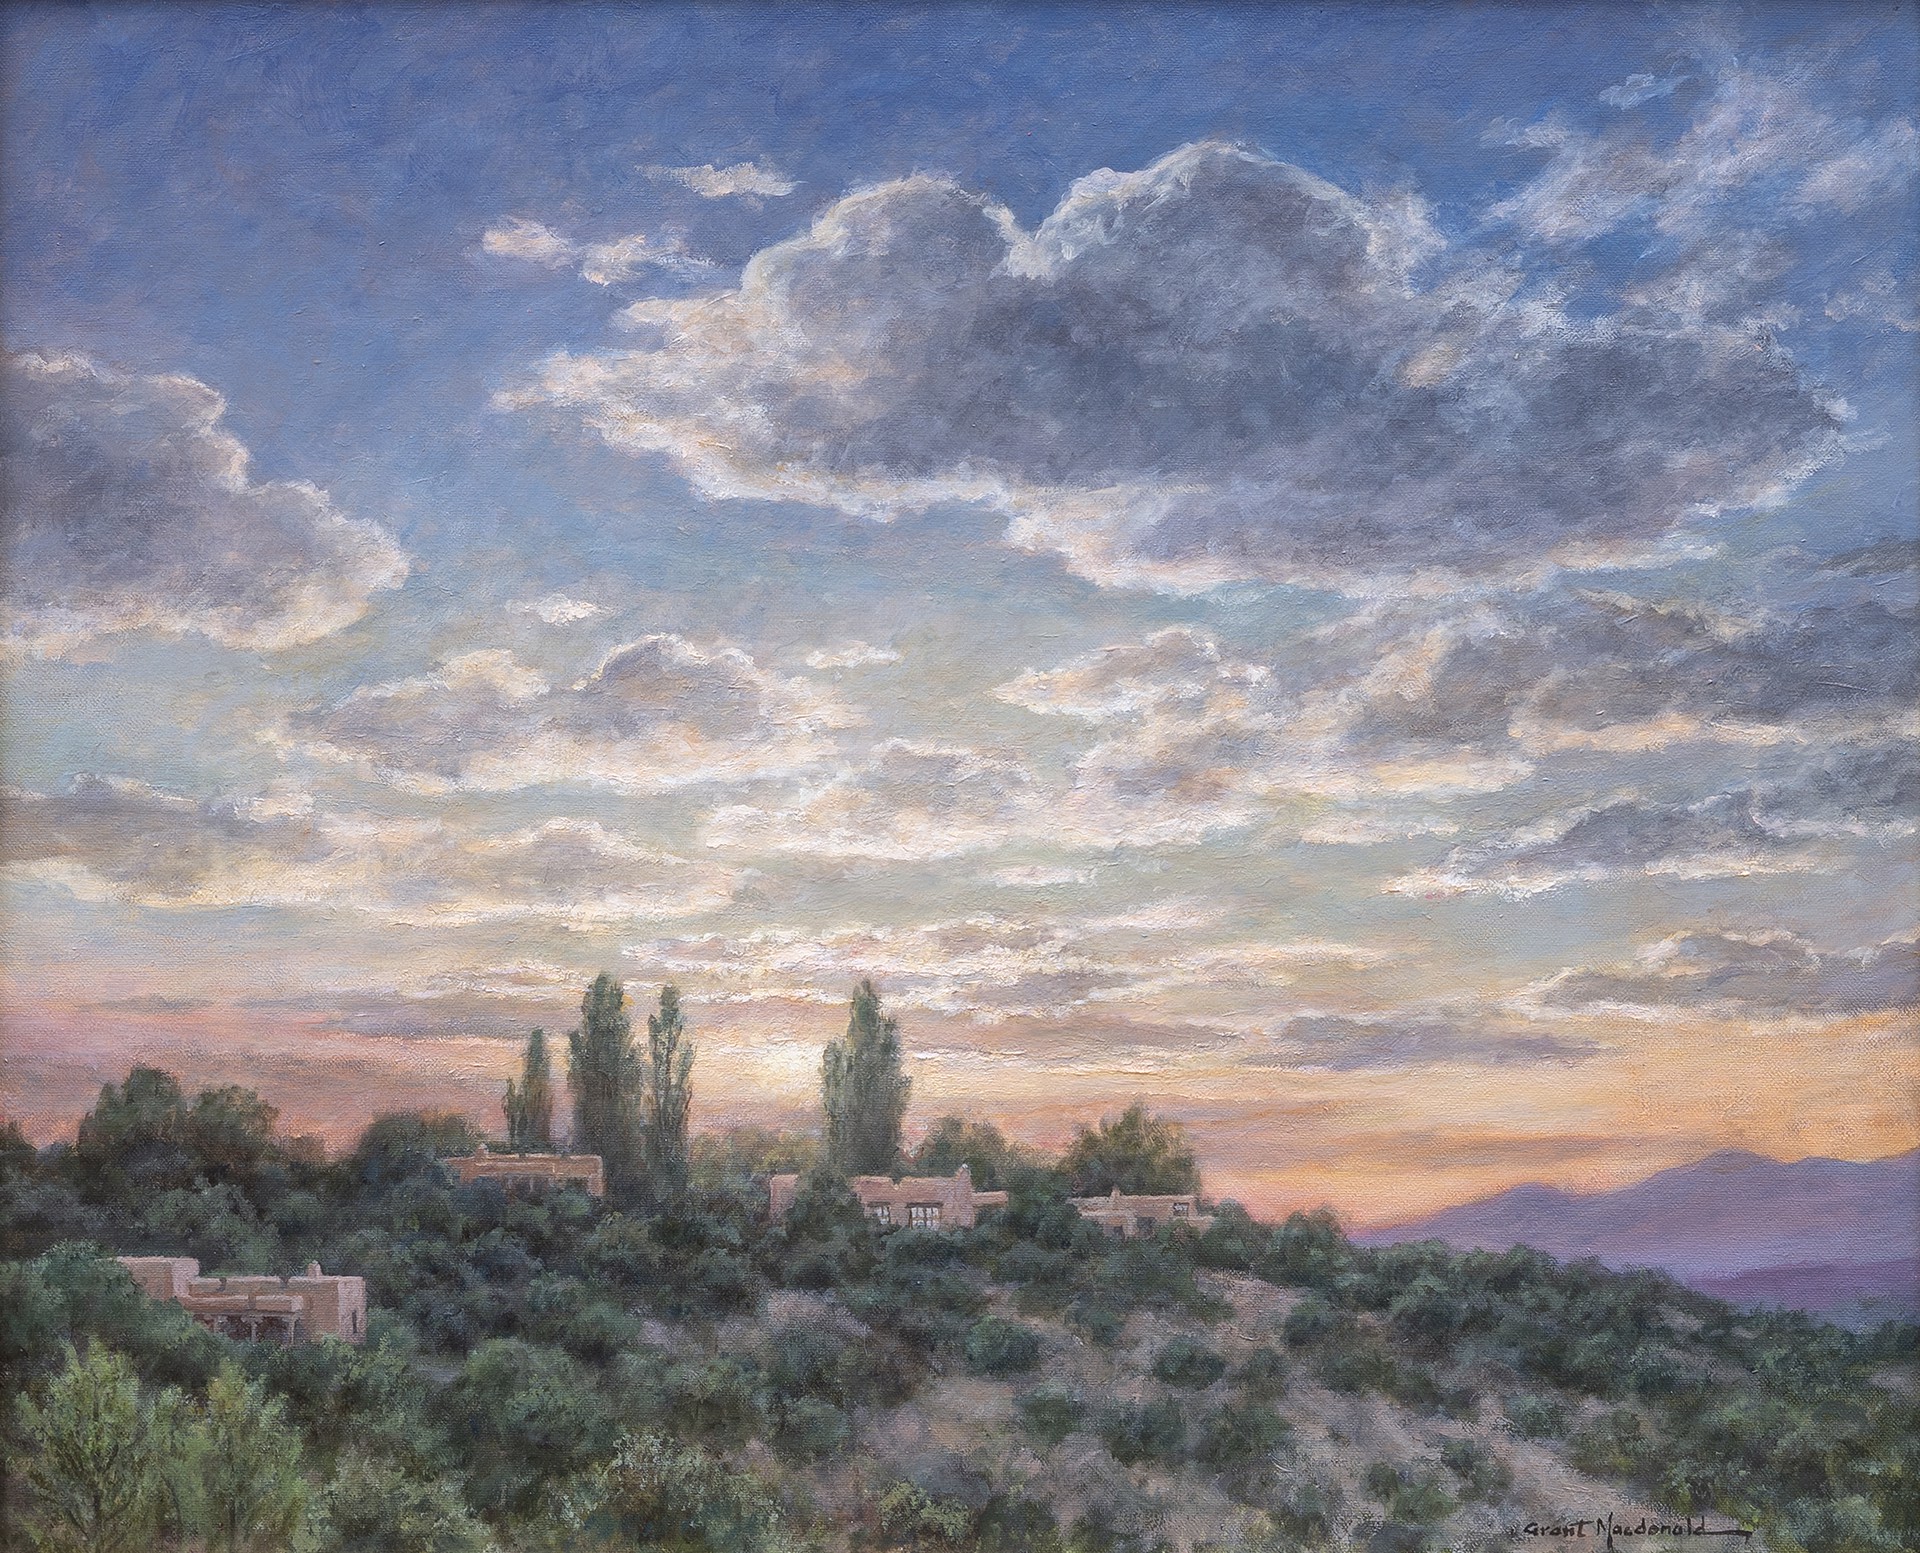 Approaching Sundown by Grant Macdonald